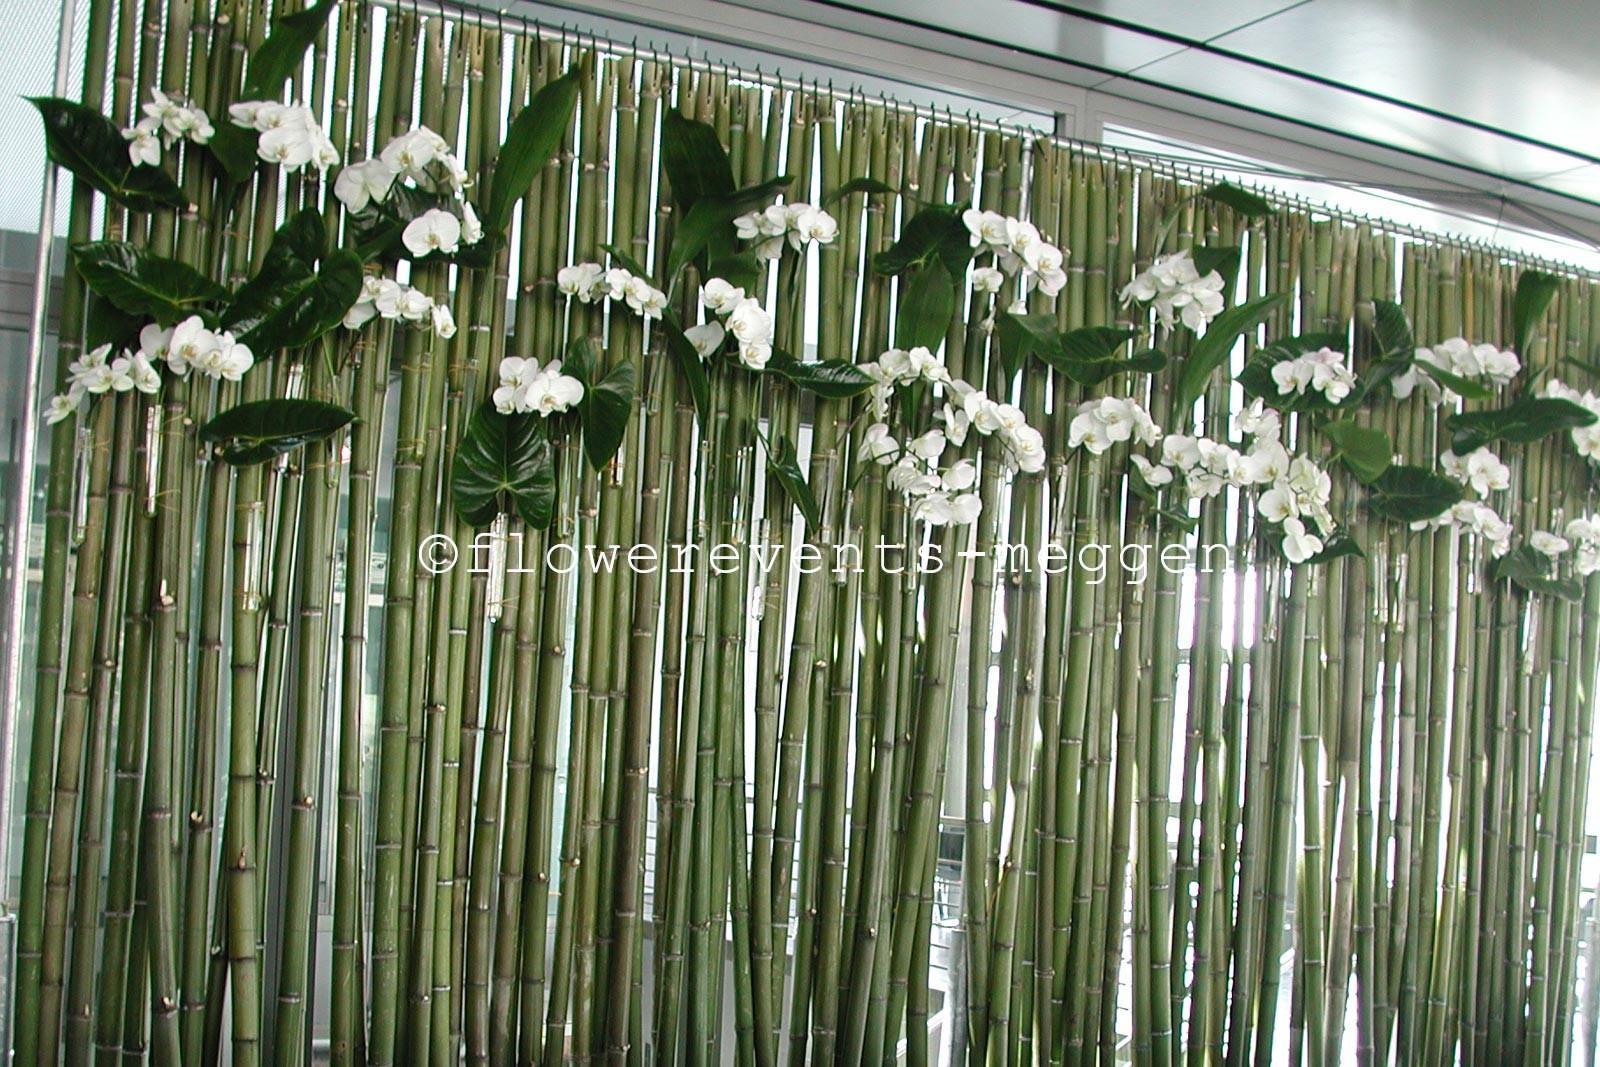 Bambuswand mit Orchideen